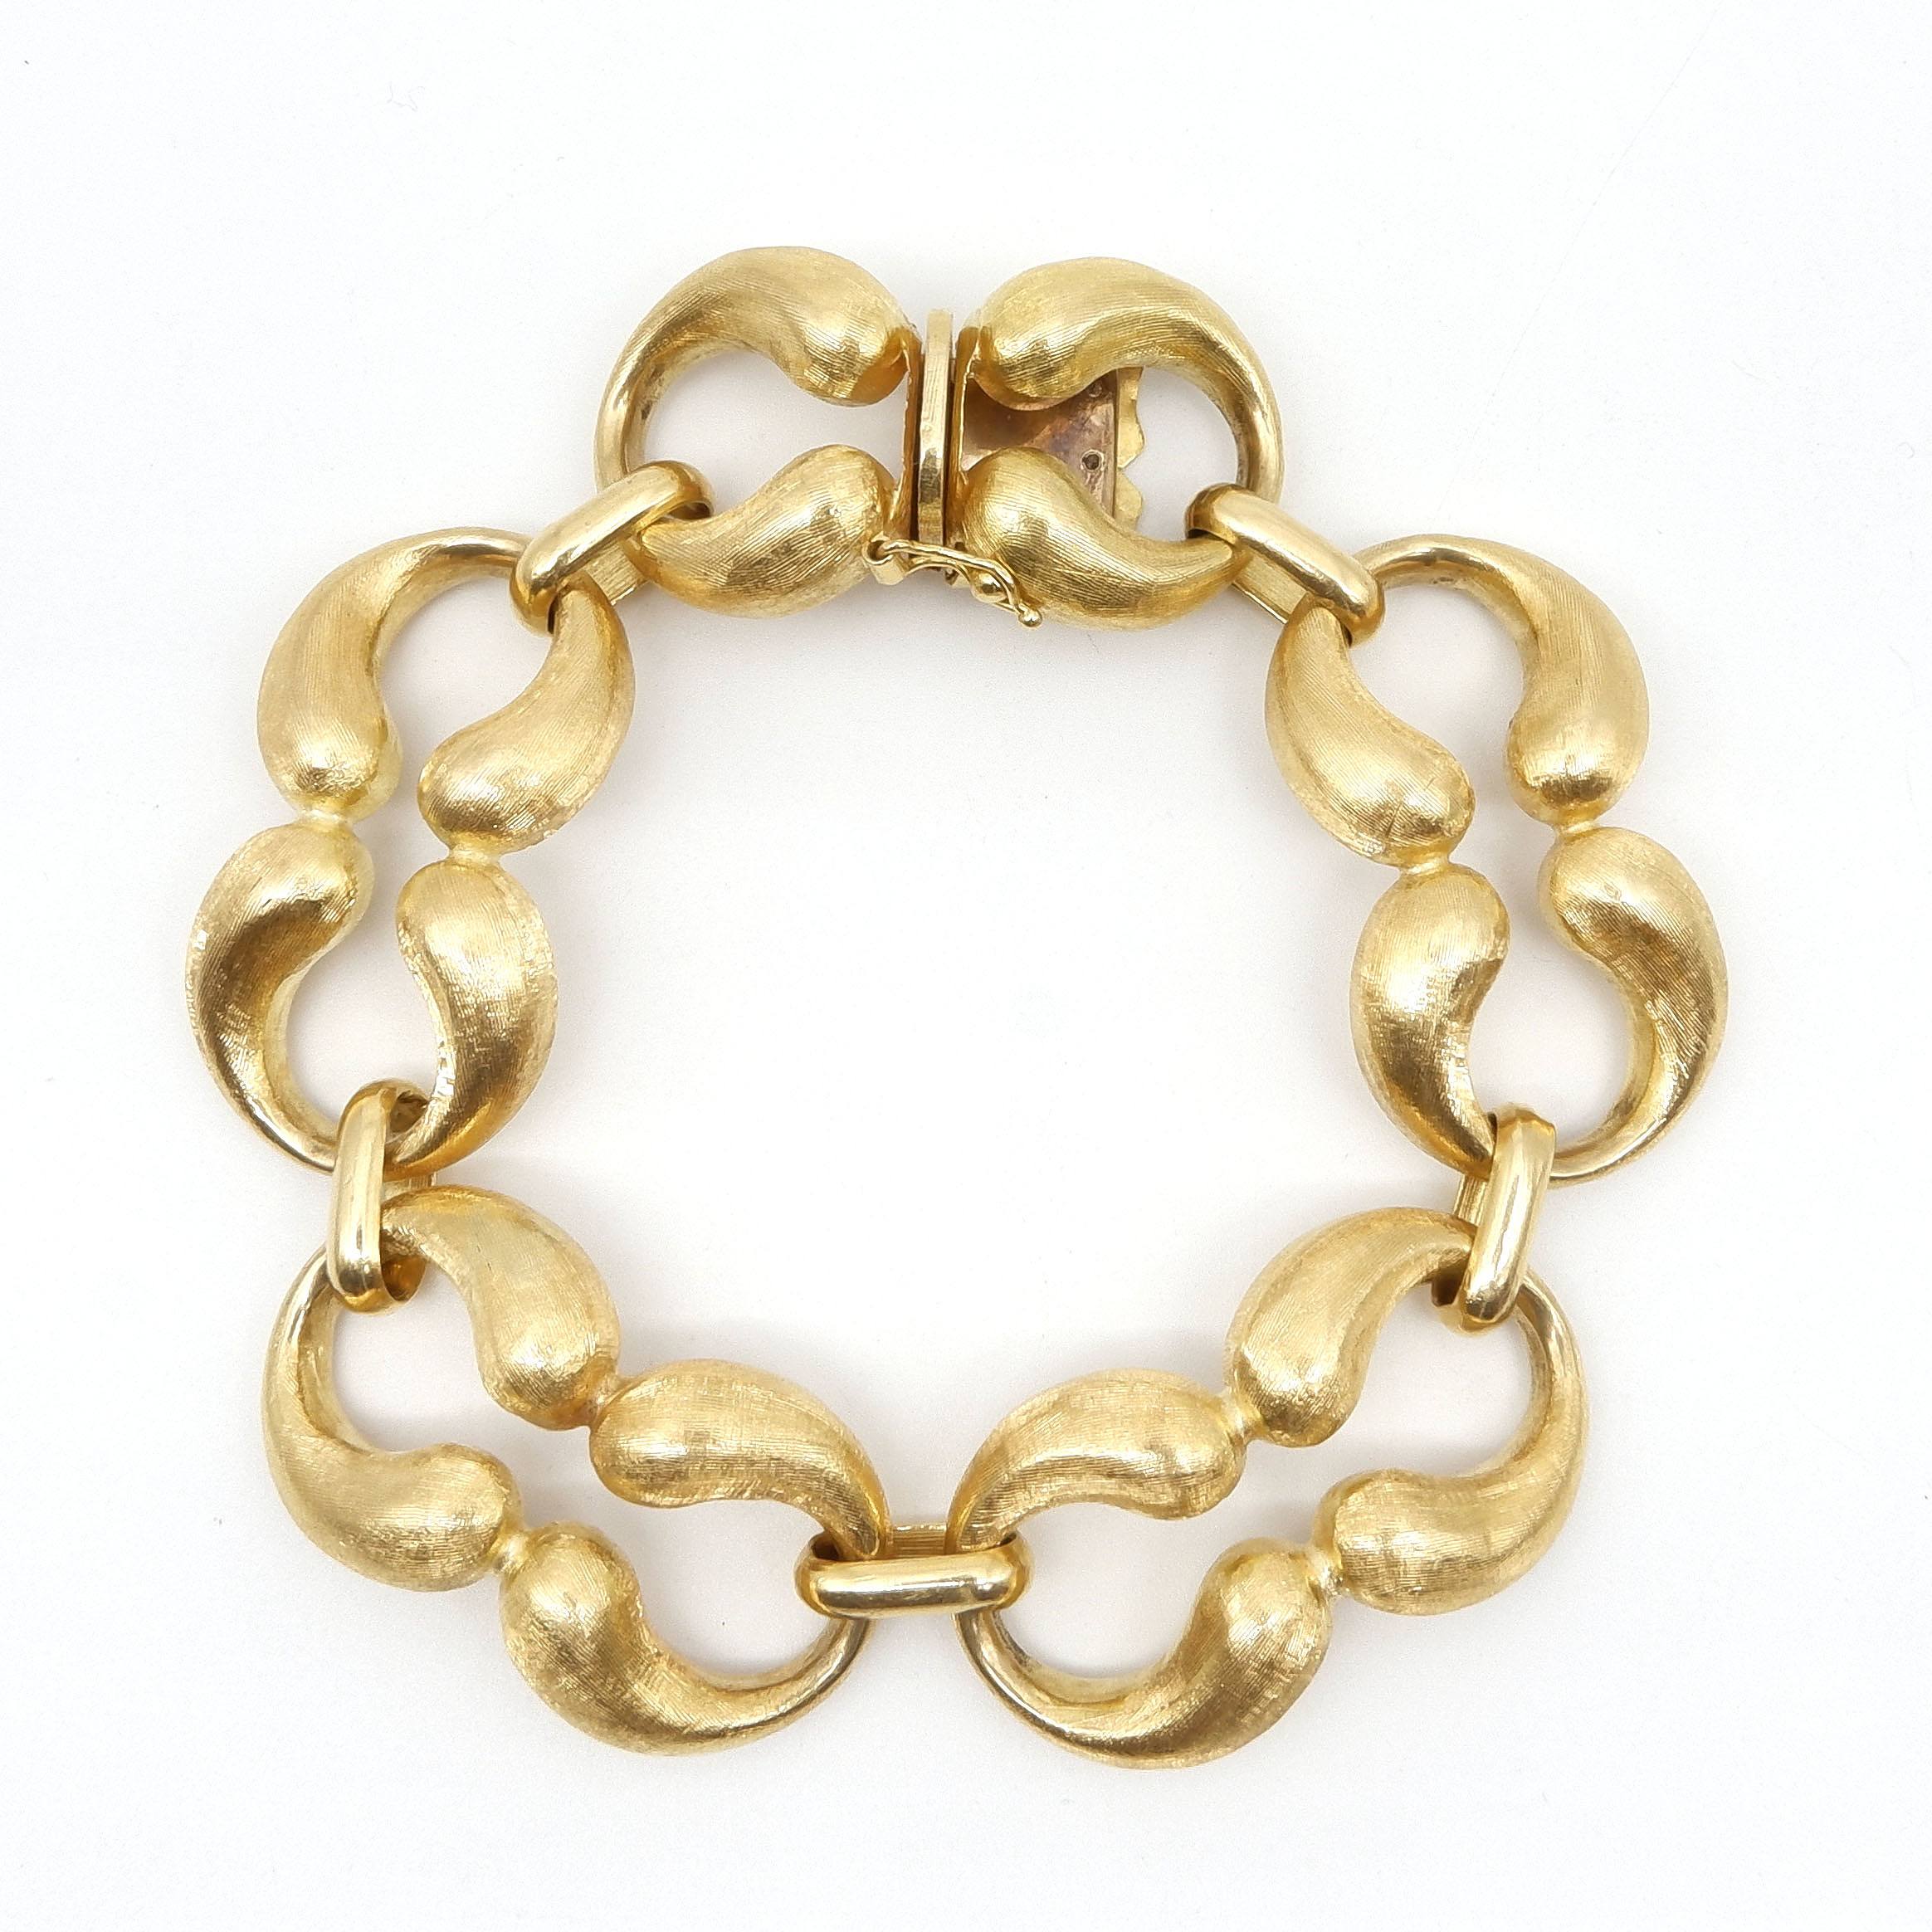 '18ct Yellow Gold Fancy Figure Eight Link Bracelet, 51.15g'